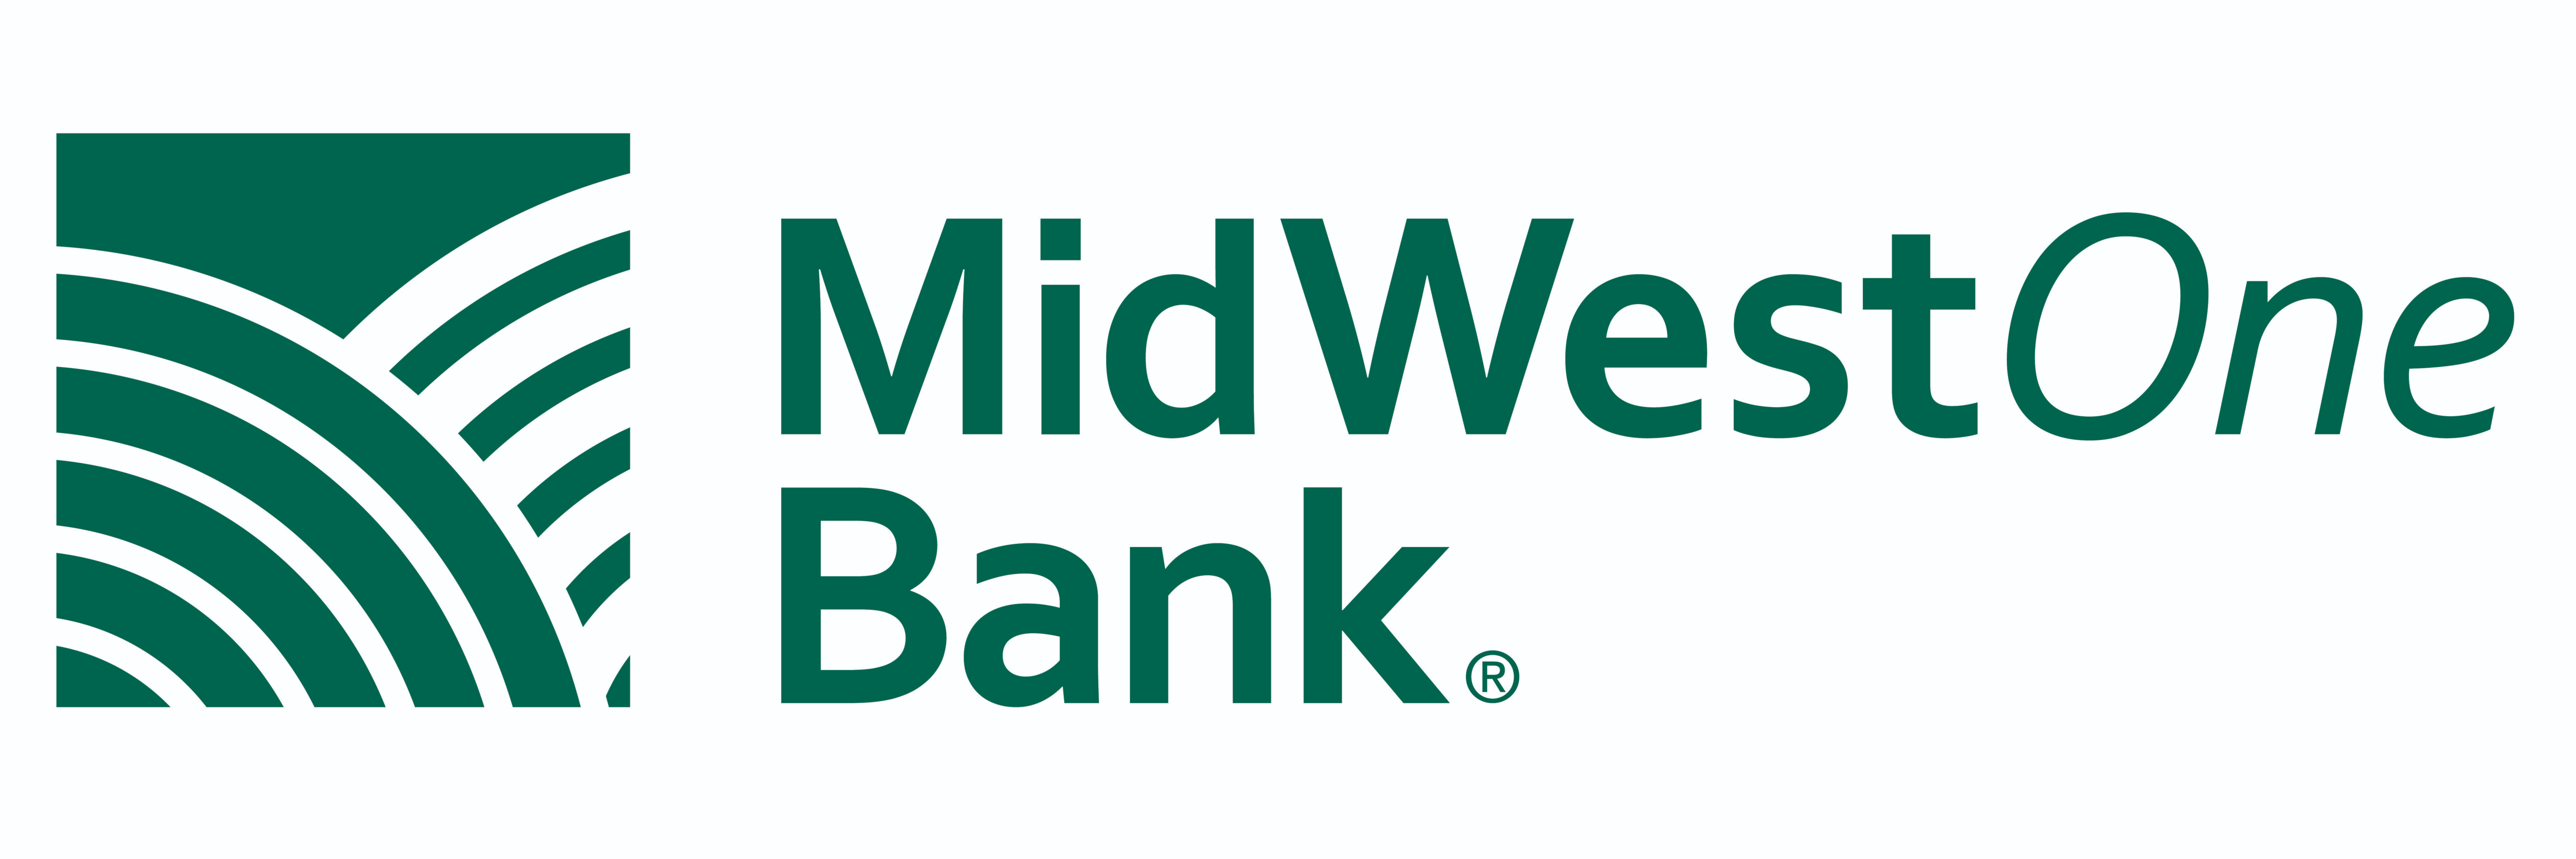 MidWestOne Bank Company Logo